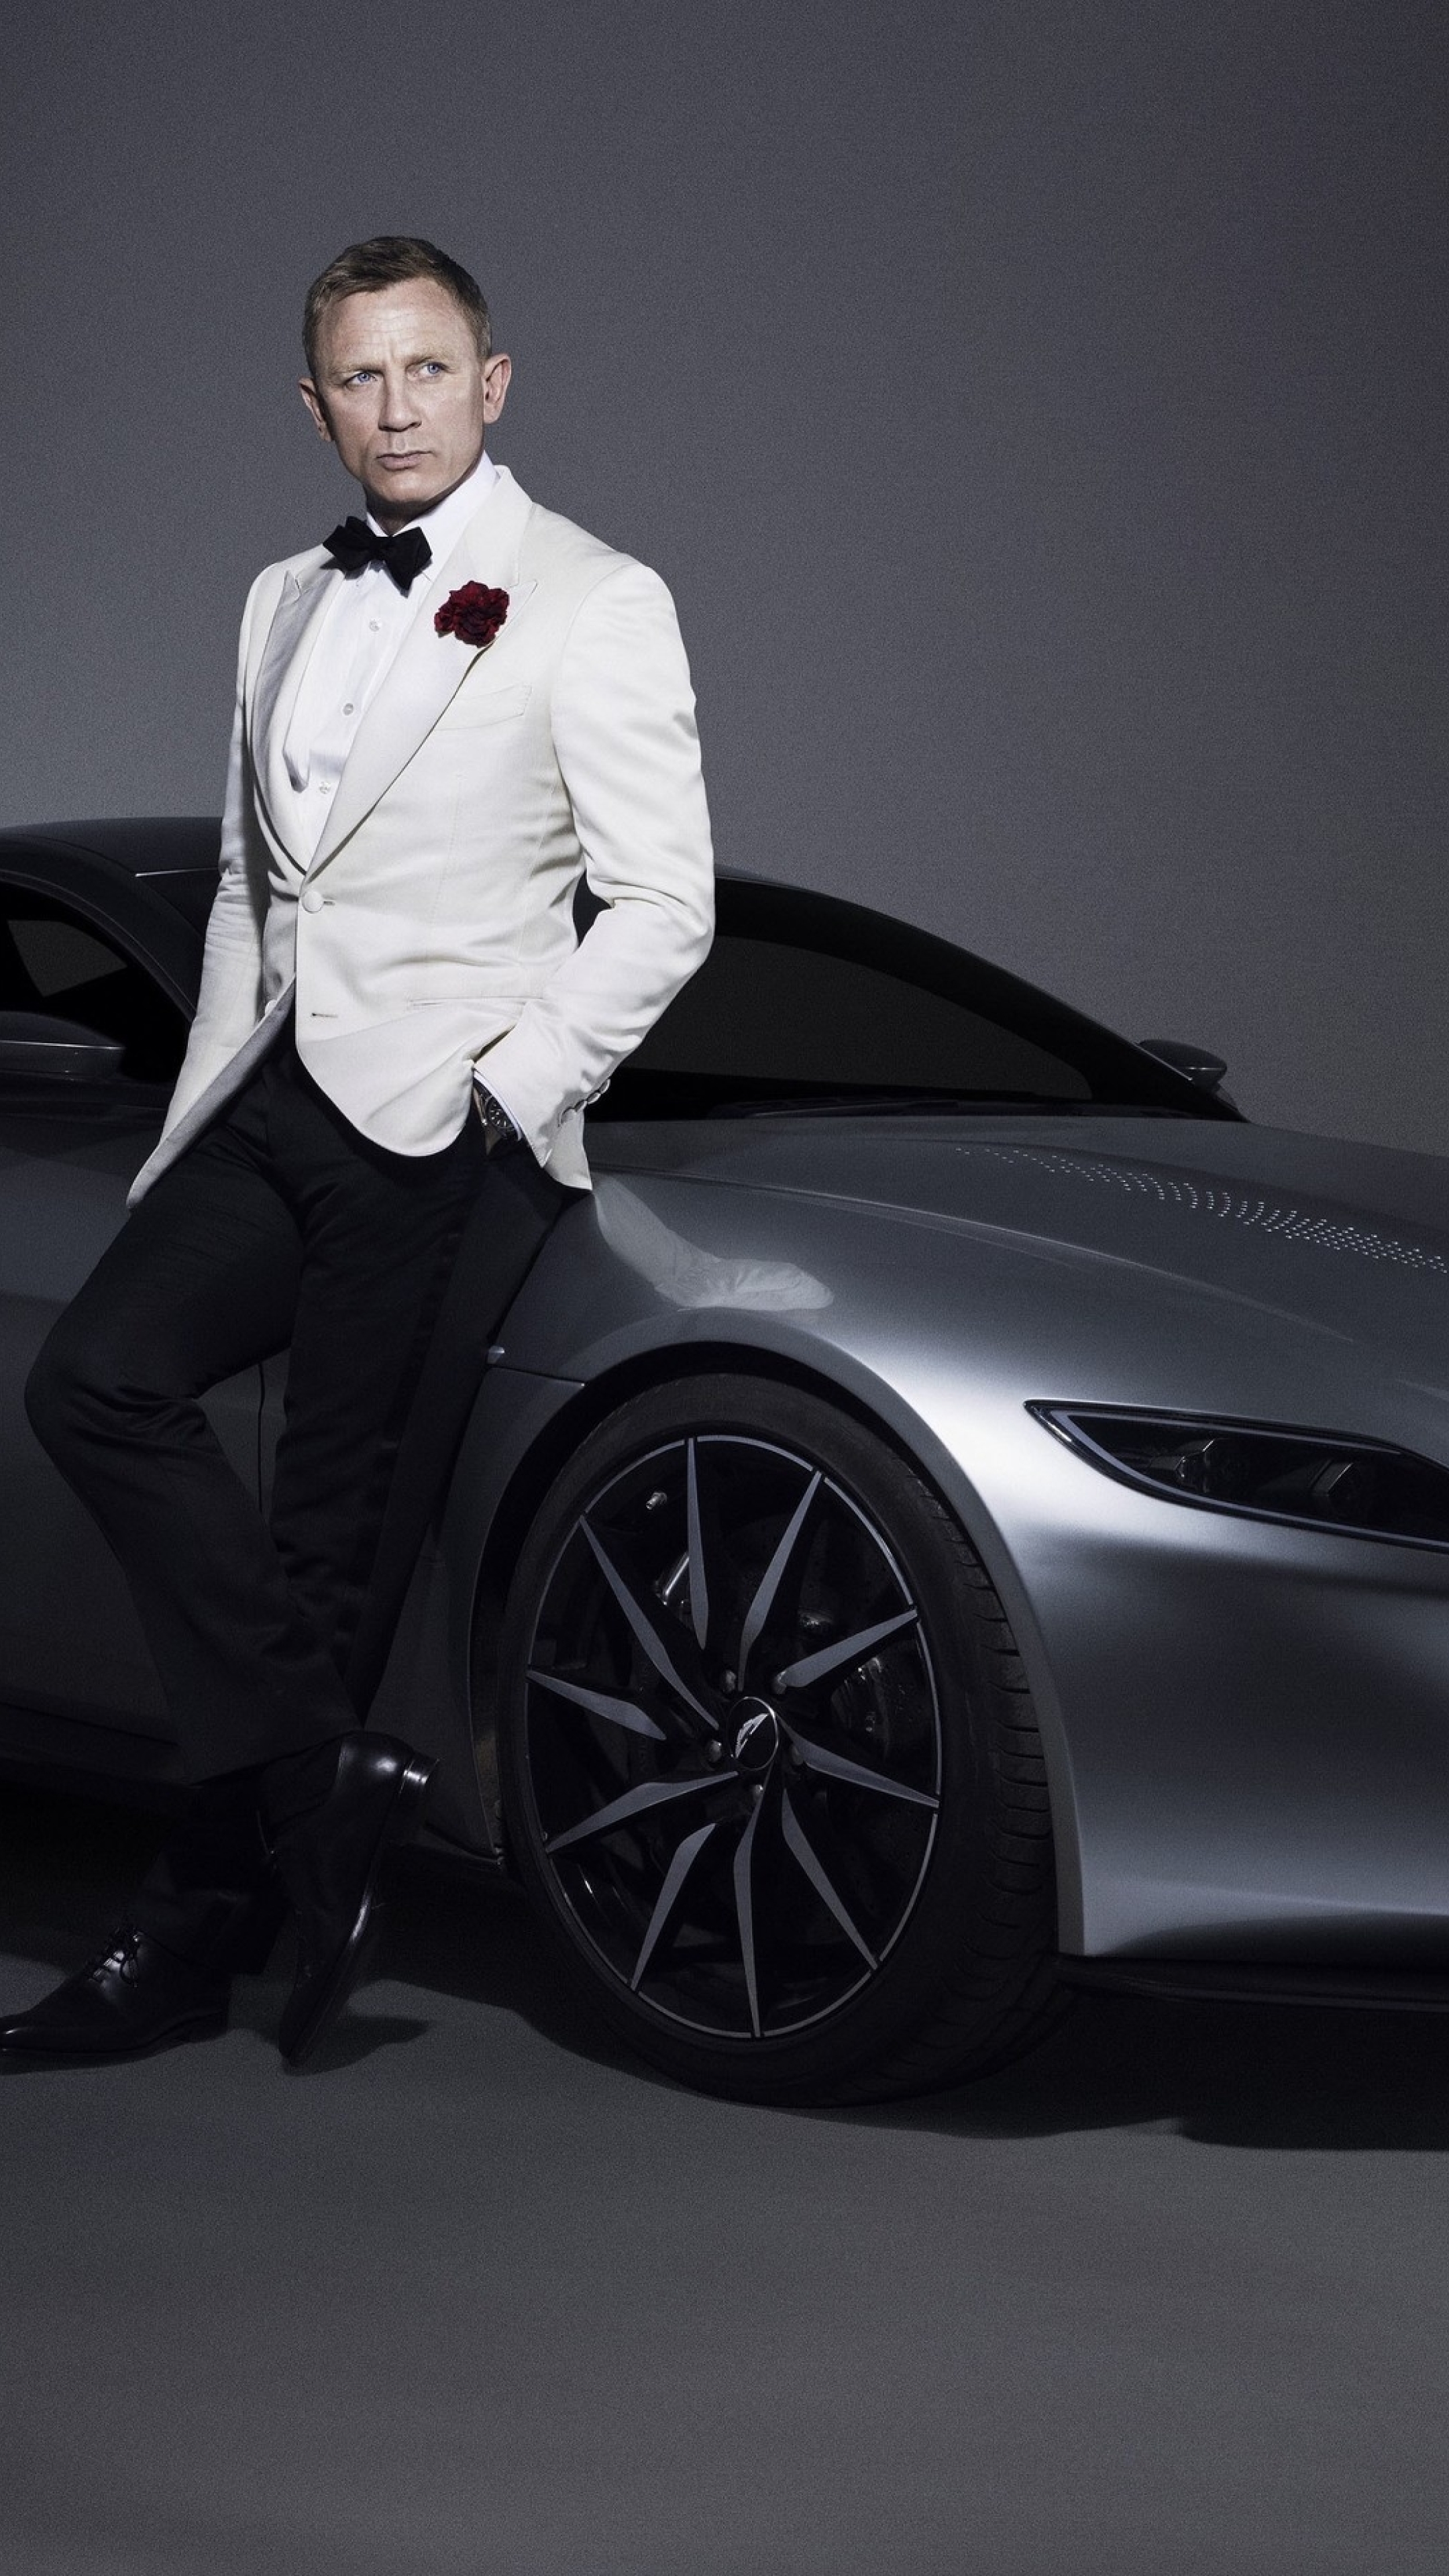 2160x3840 Daniel Craig 007 James Bond Aston Martin Car Photoshoot Sony Xperia X Xz Z5 Premium Wallpaper Hd Celebrities 4k Wallpapers Images Photos And Background Wallpapers Den